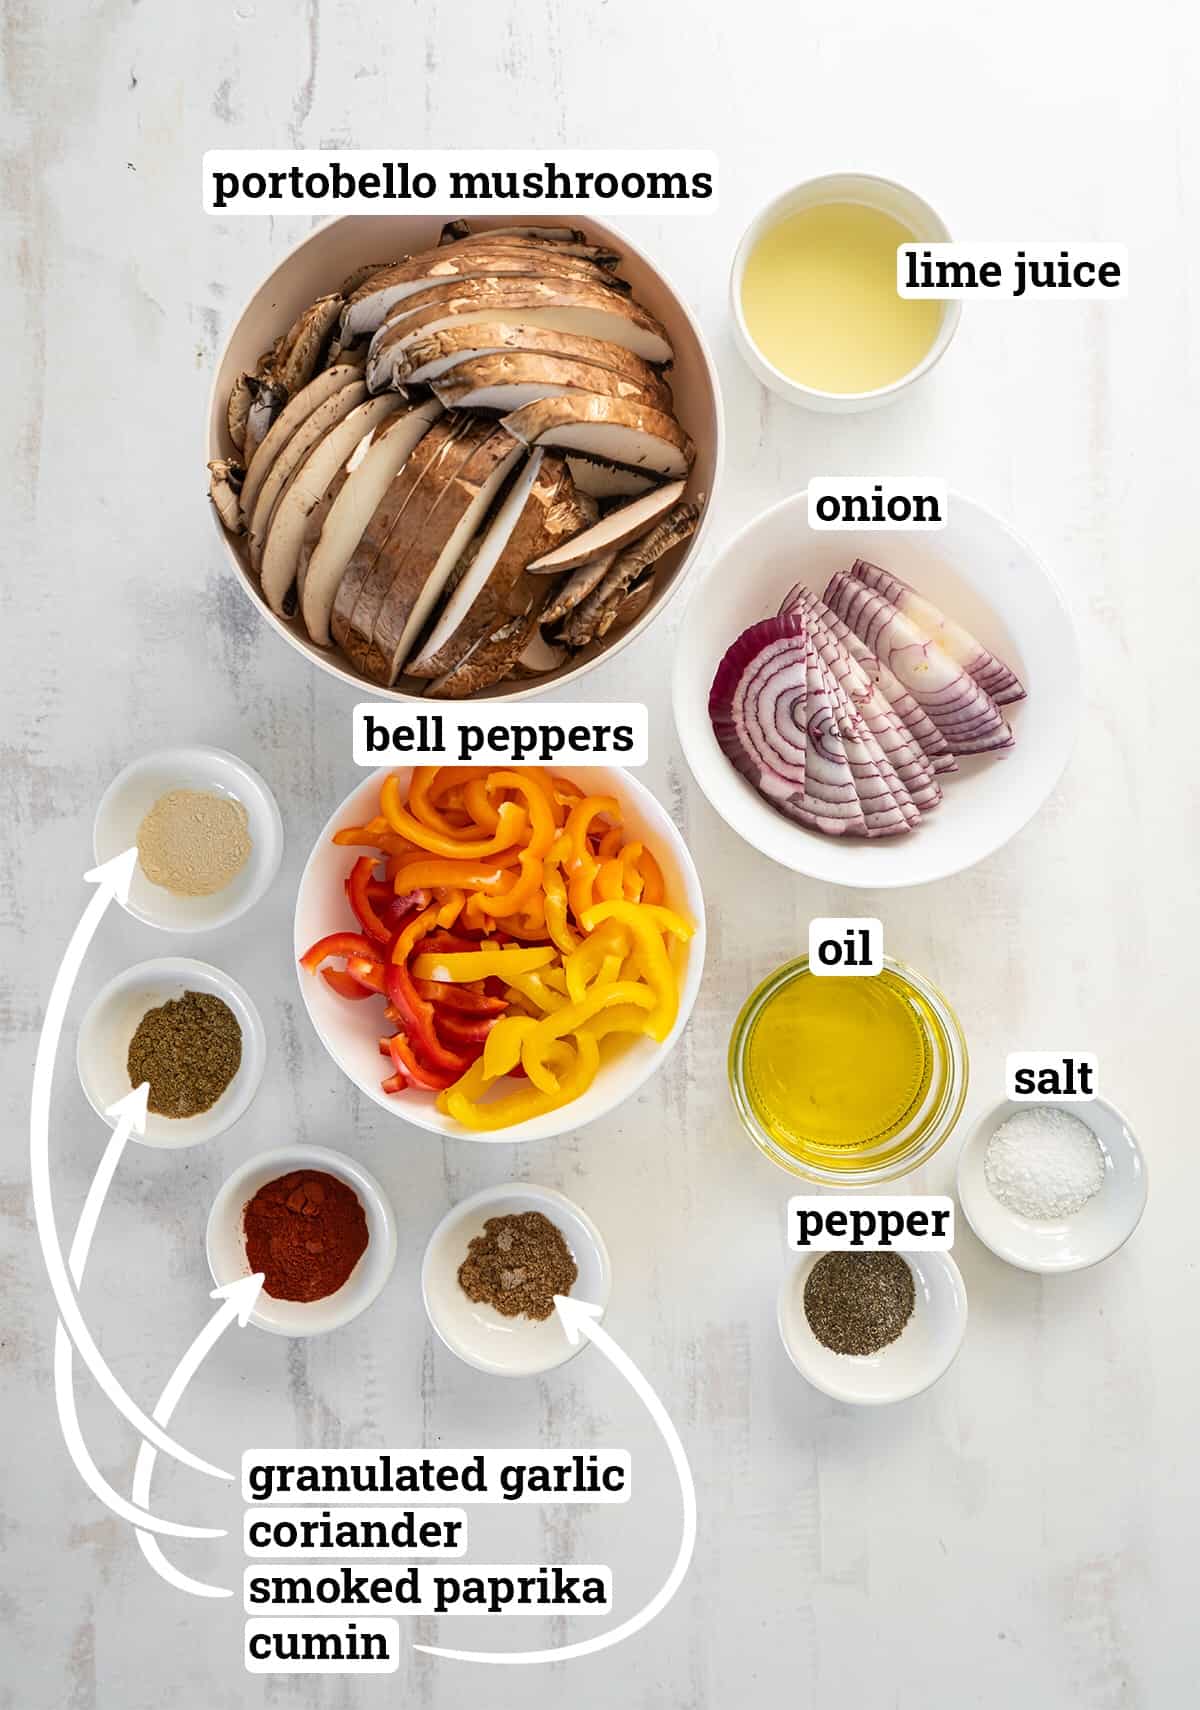 Ingredients for Portobello Mushroom Fajitas and marinade.